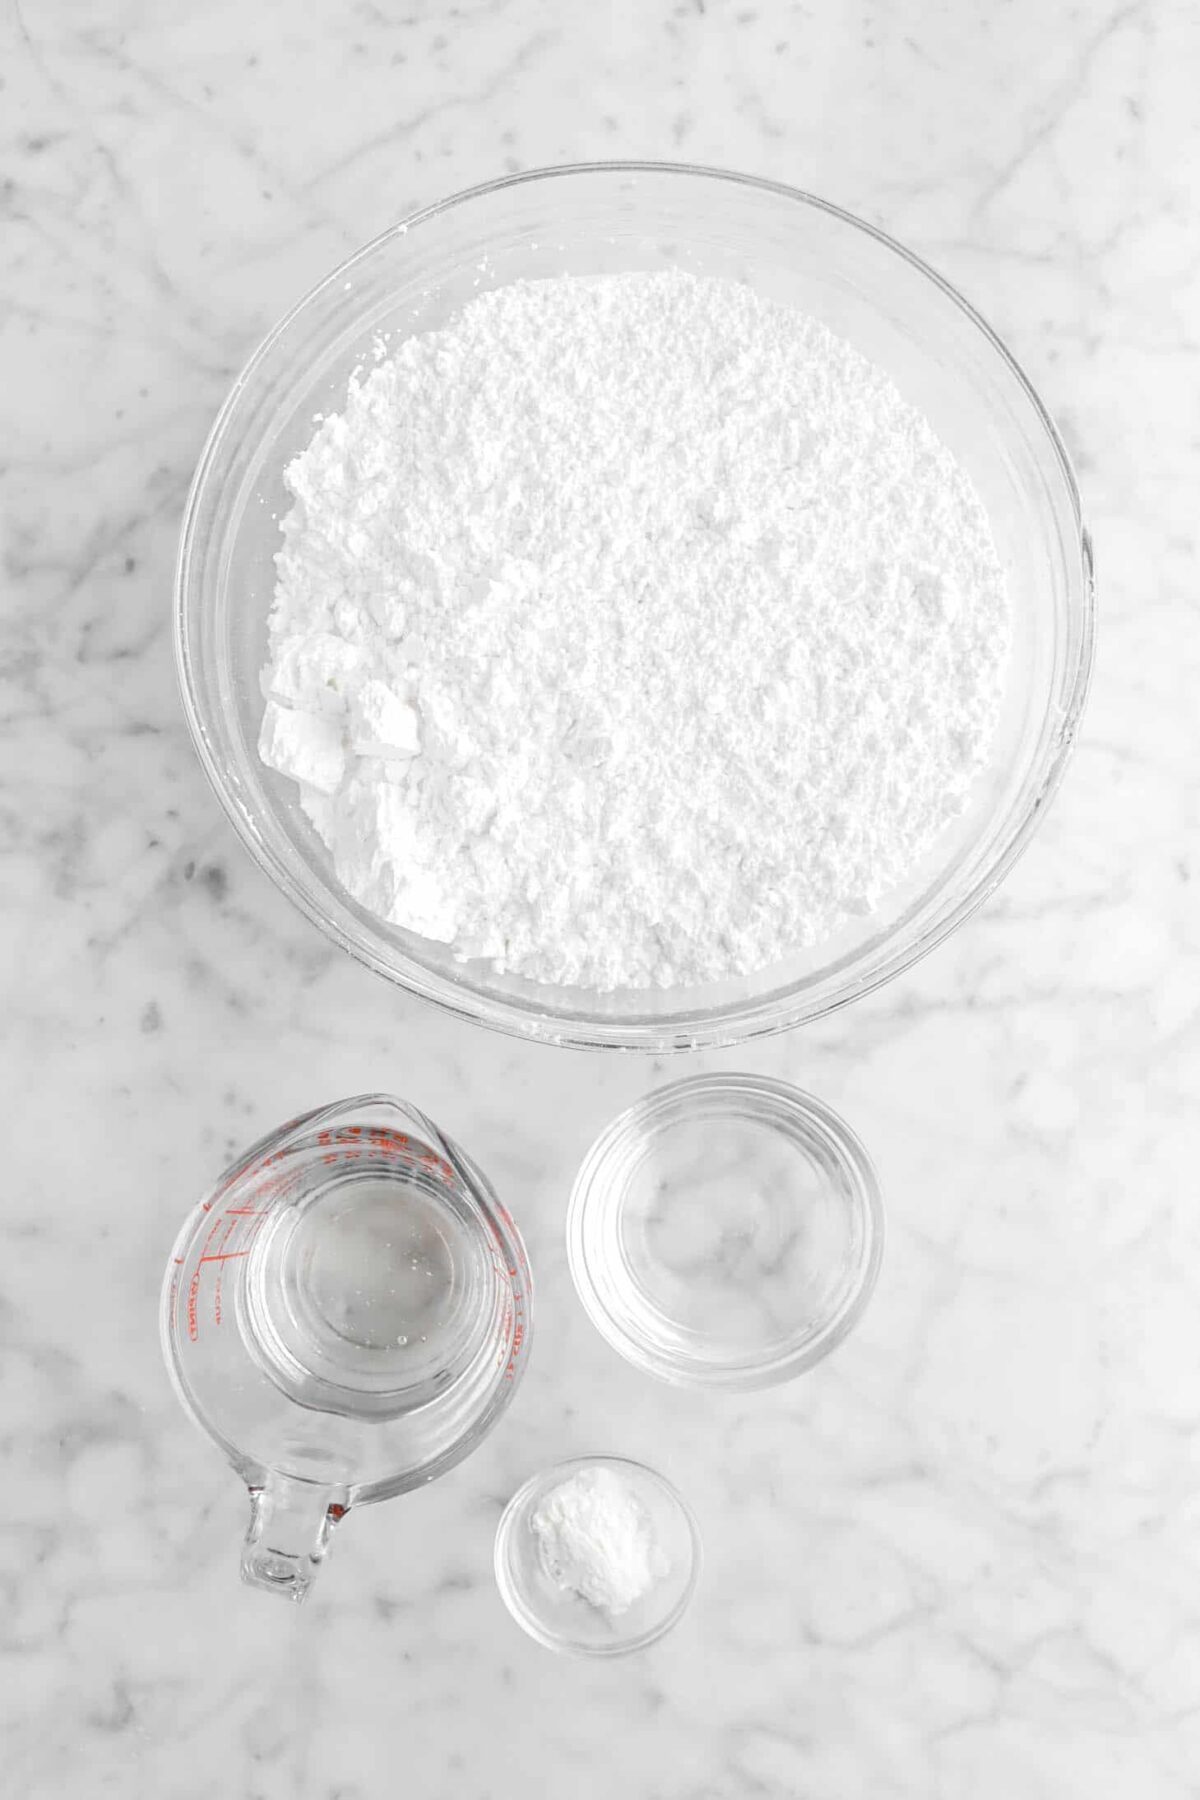 powdered sugar, corn syrup, water, and vanilla powder on marble counter